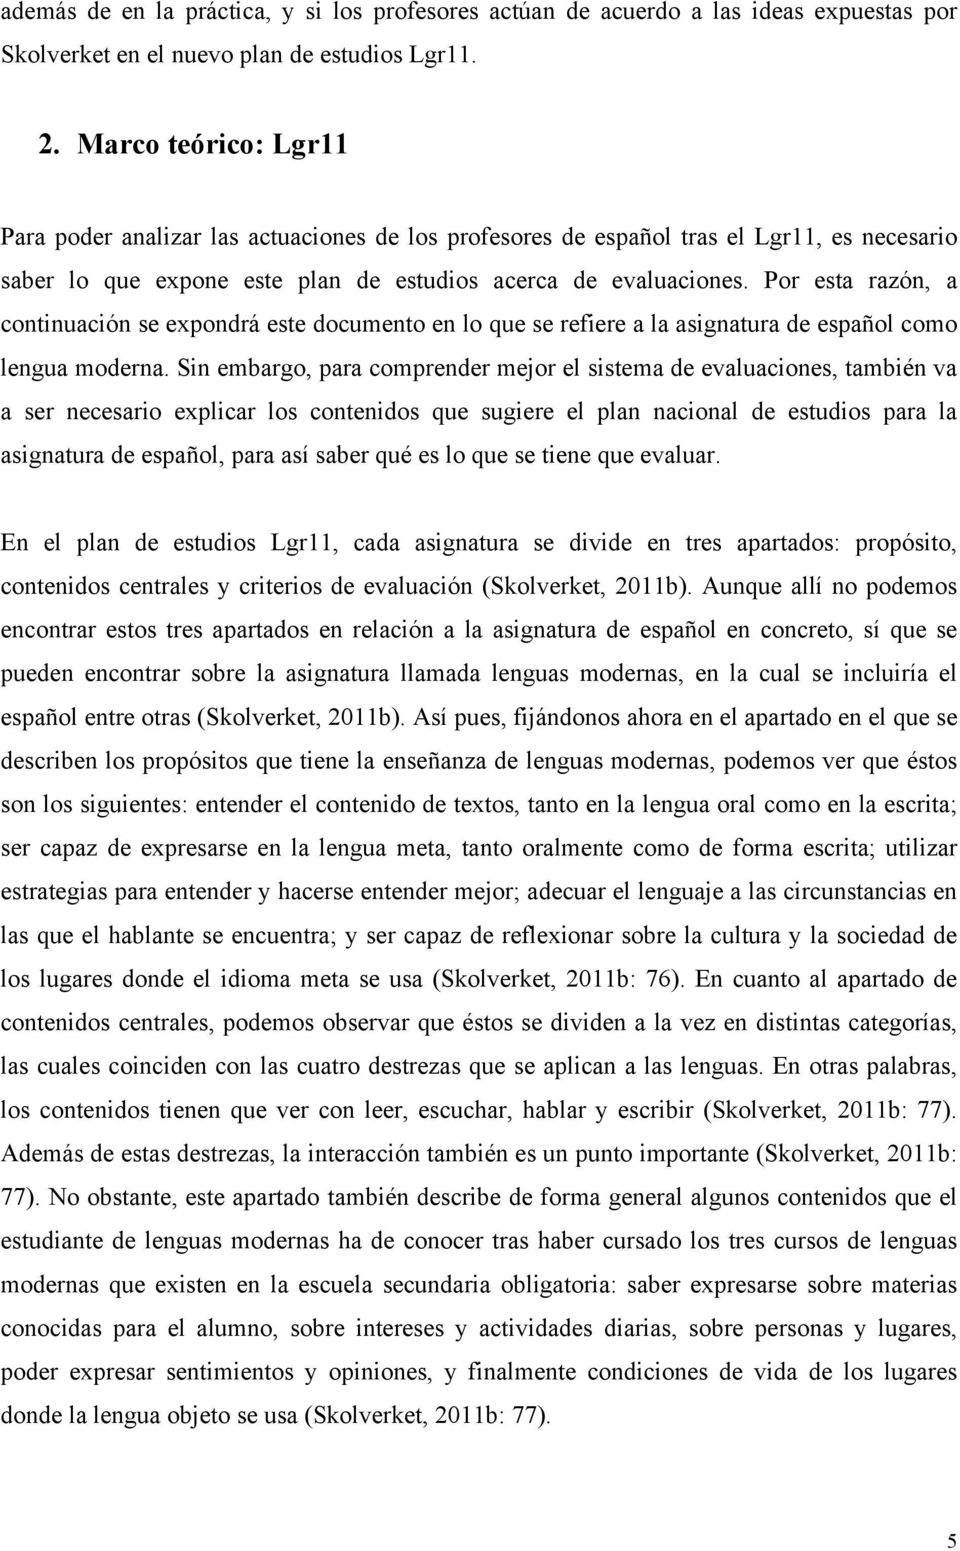 Por esta razón, a continuación se expondrá este documento en lo que se refiere a la asignatura de español como lengua moderna.